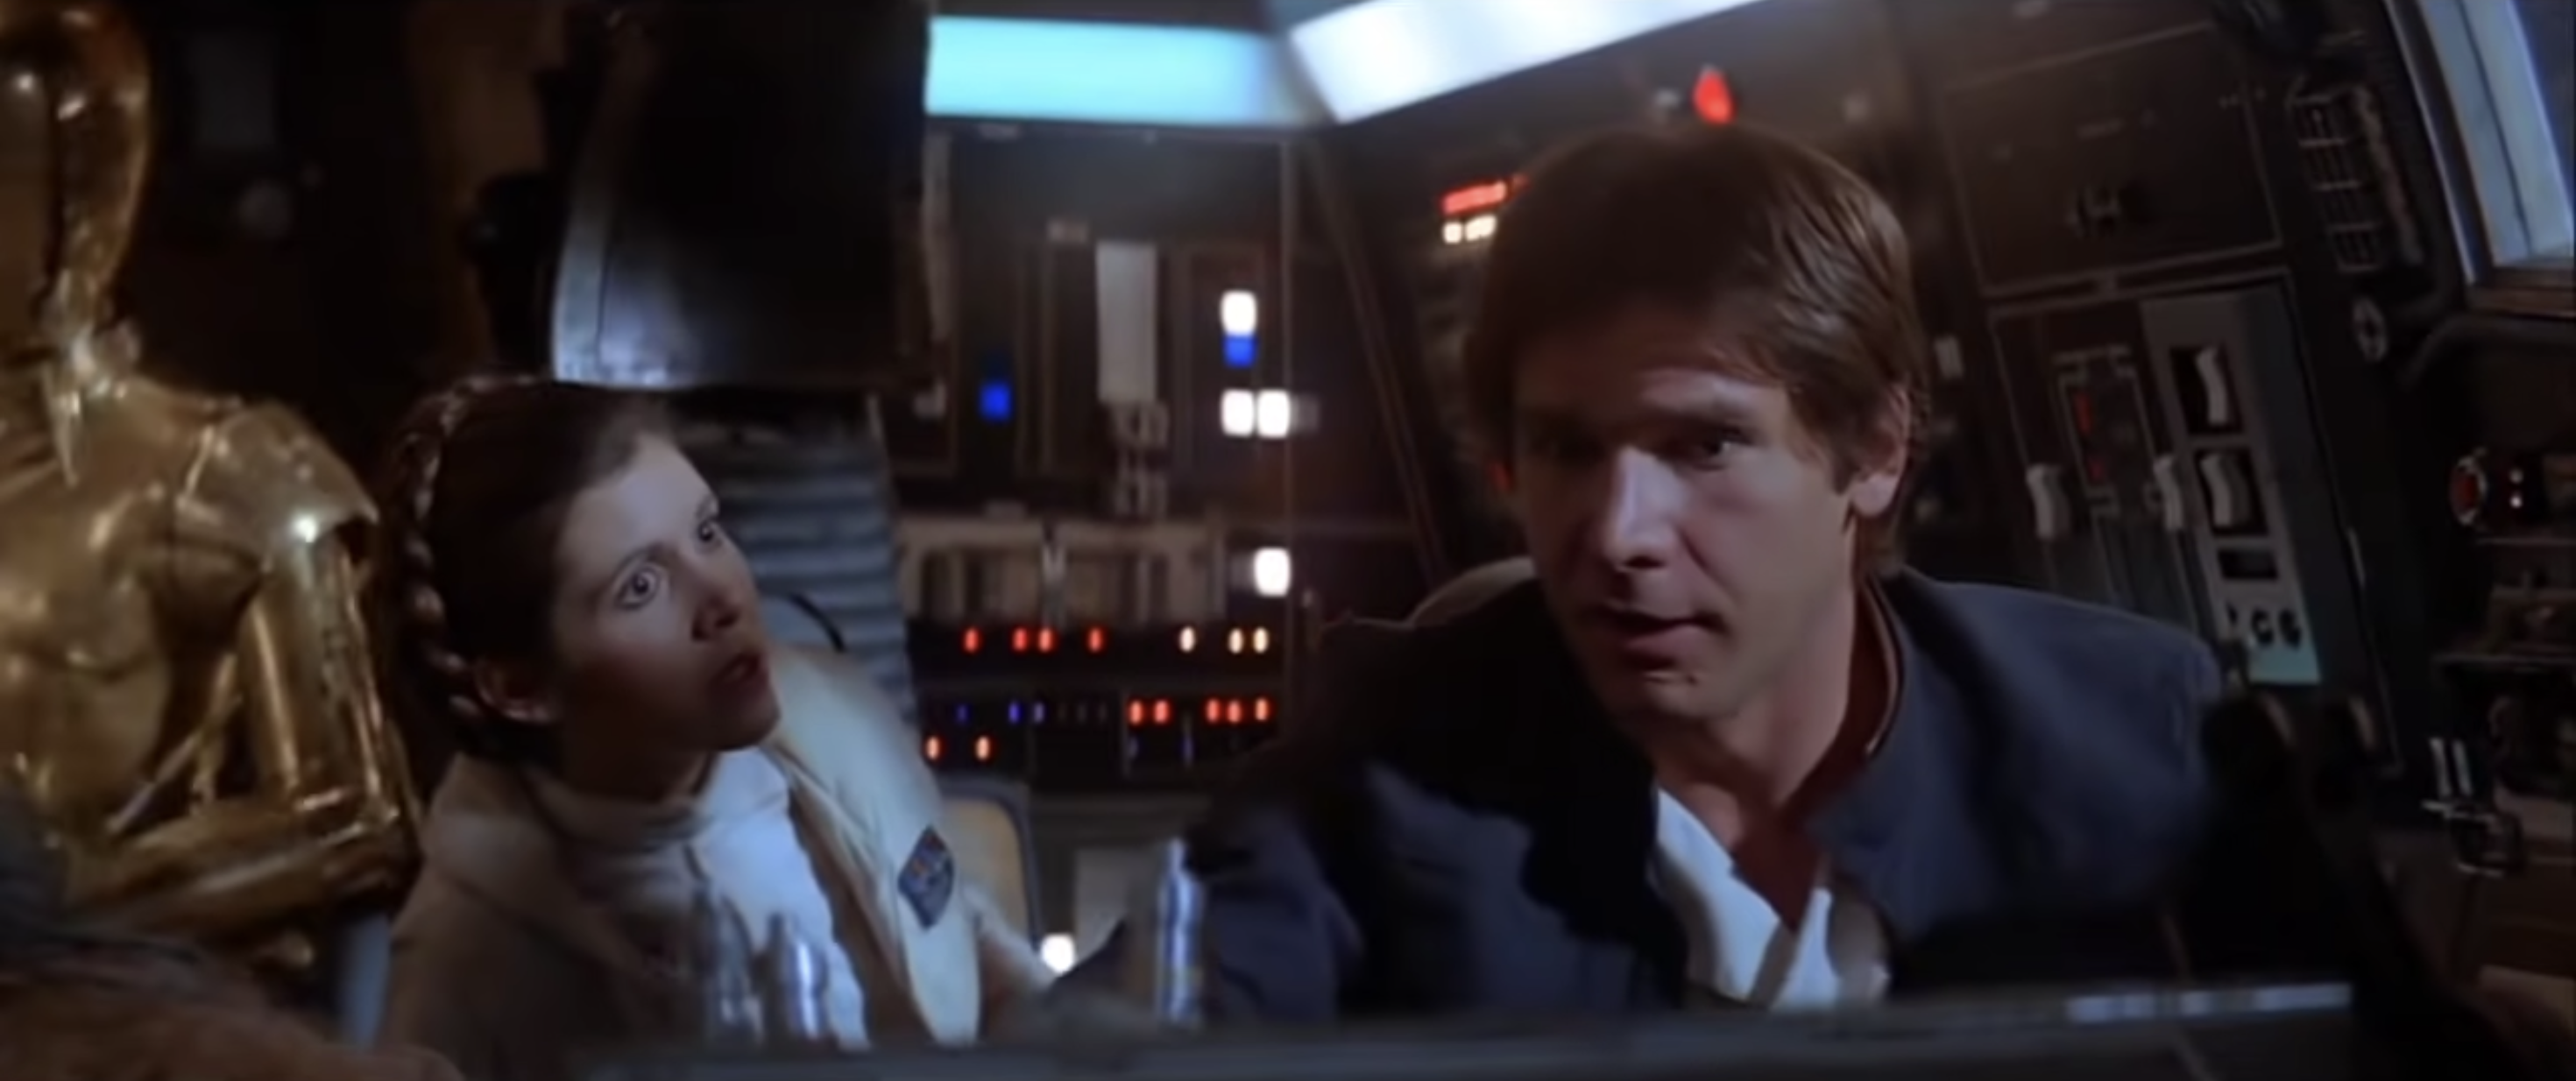 Han Solo and Princess Leia in the Millennium Falcon